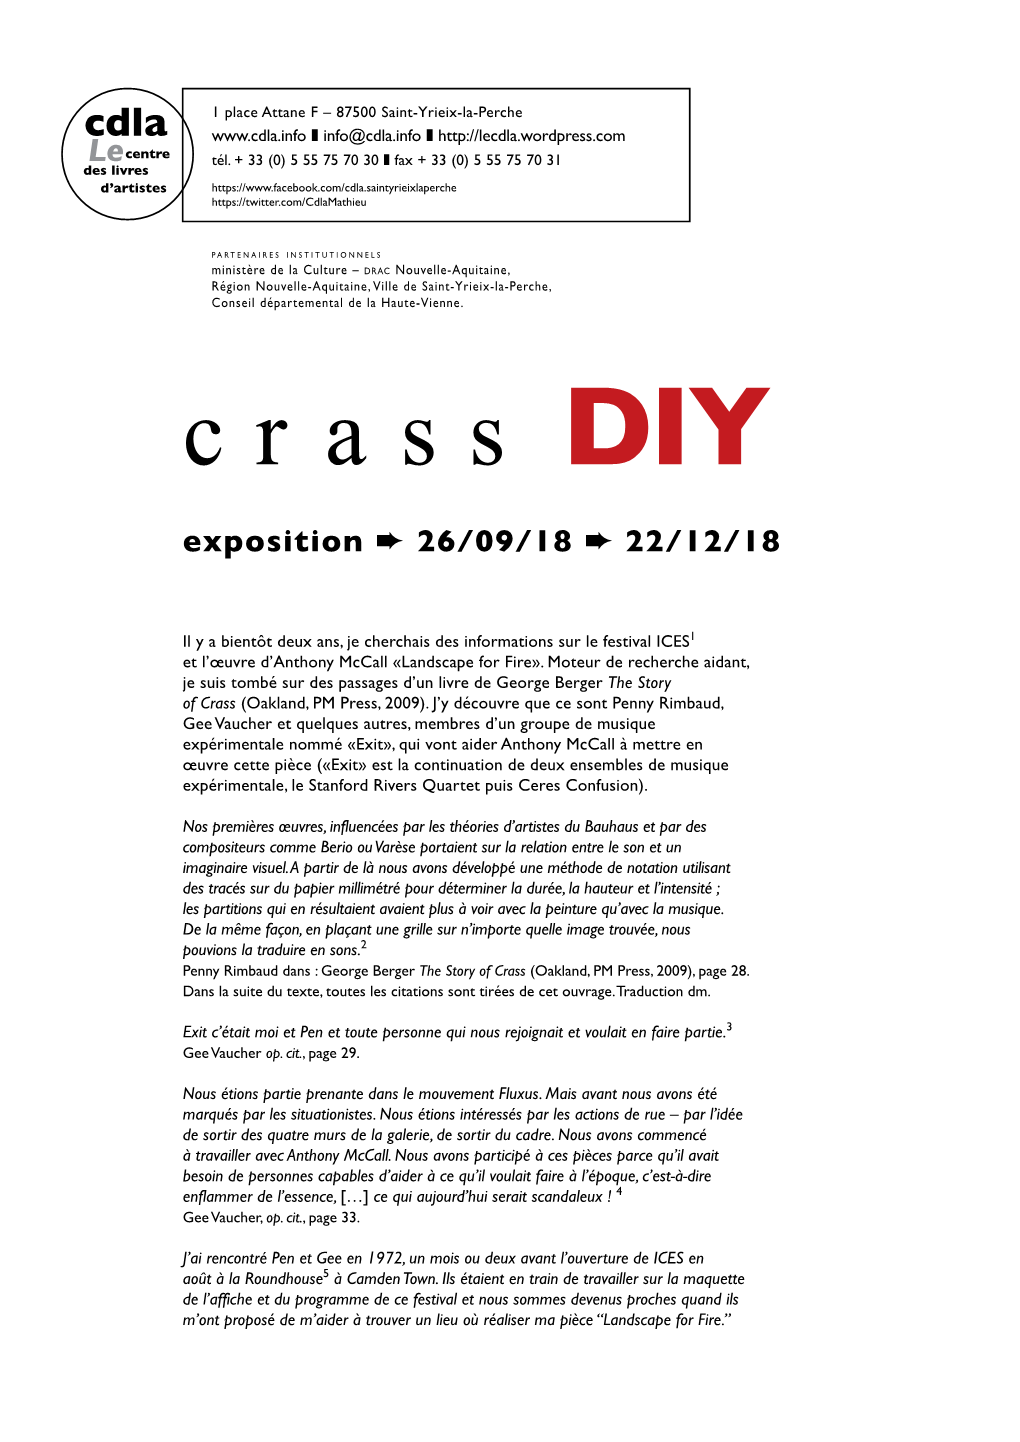 Crass DIY Exposition ➨ 26/09/18 ➨ 22/12/18